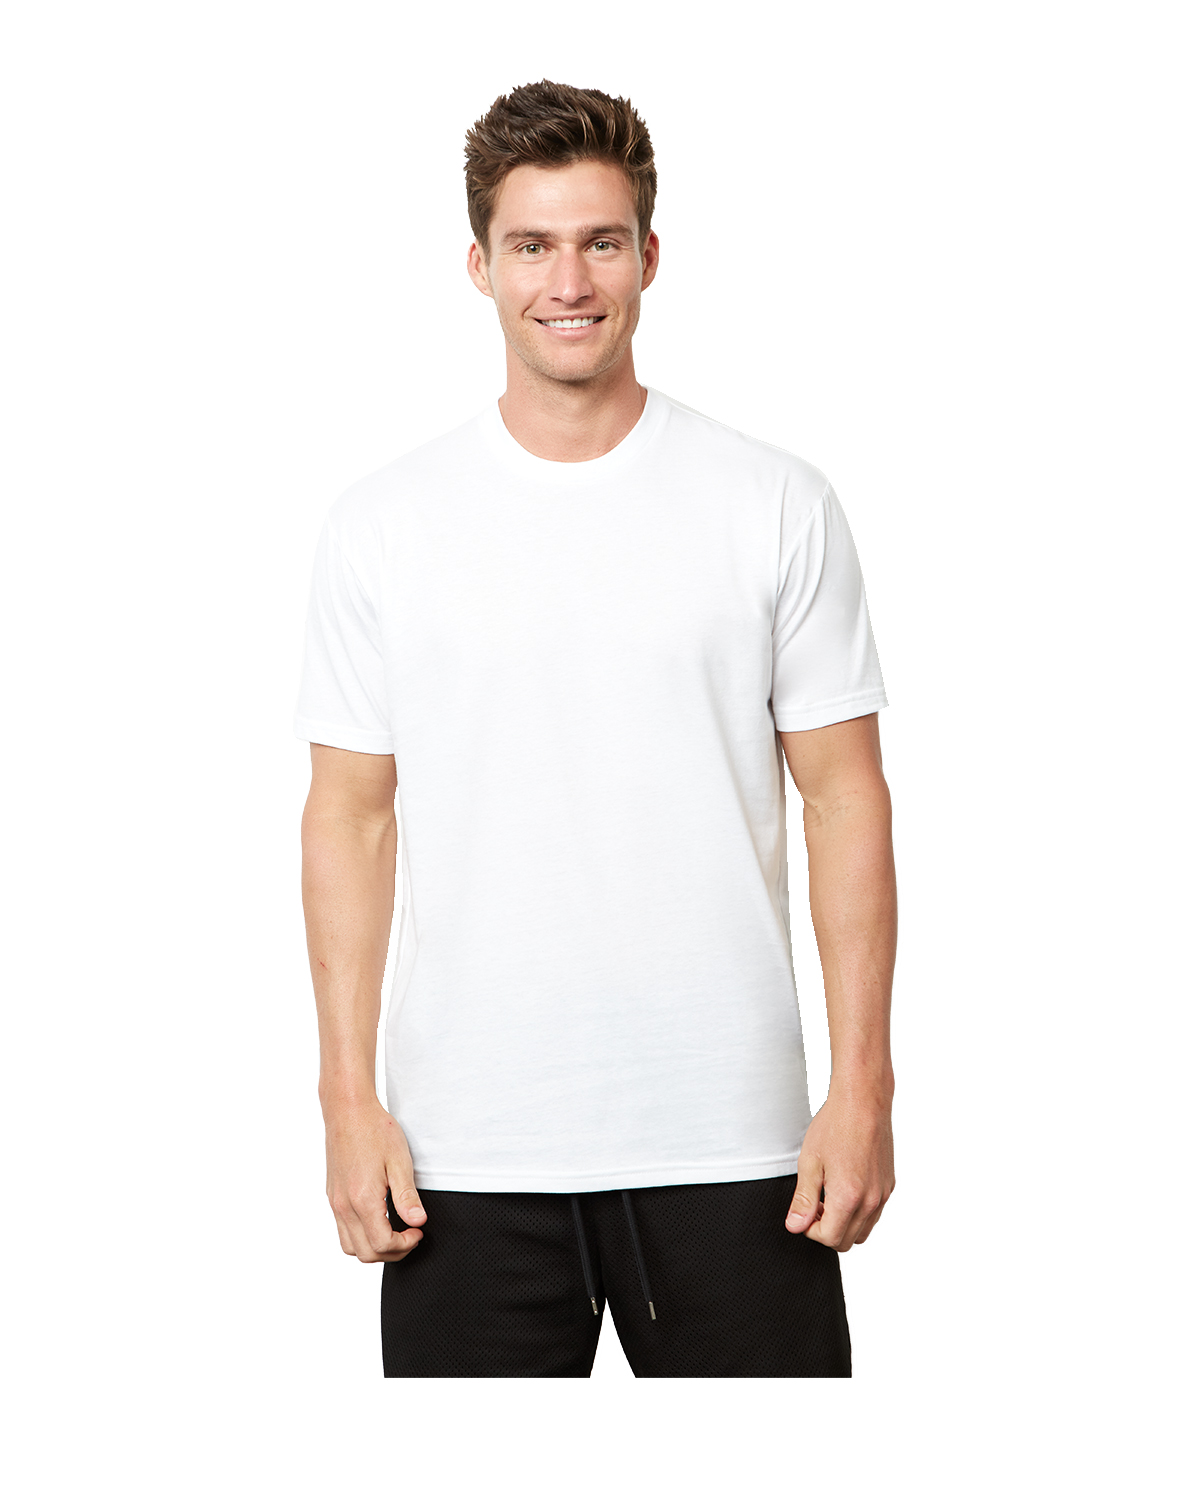 Next Level Apparel 4210 - Unisex Eco Performance T-Shirt